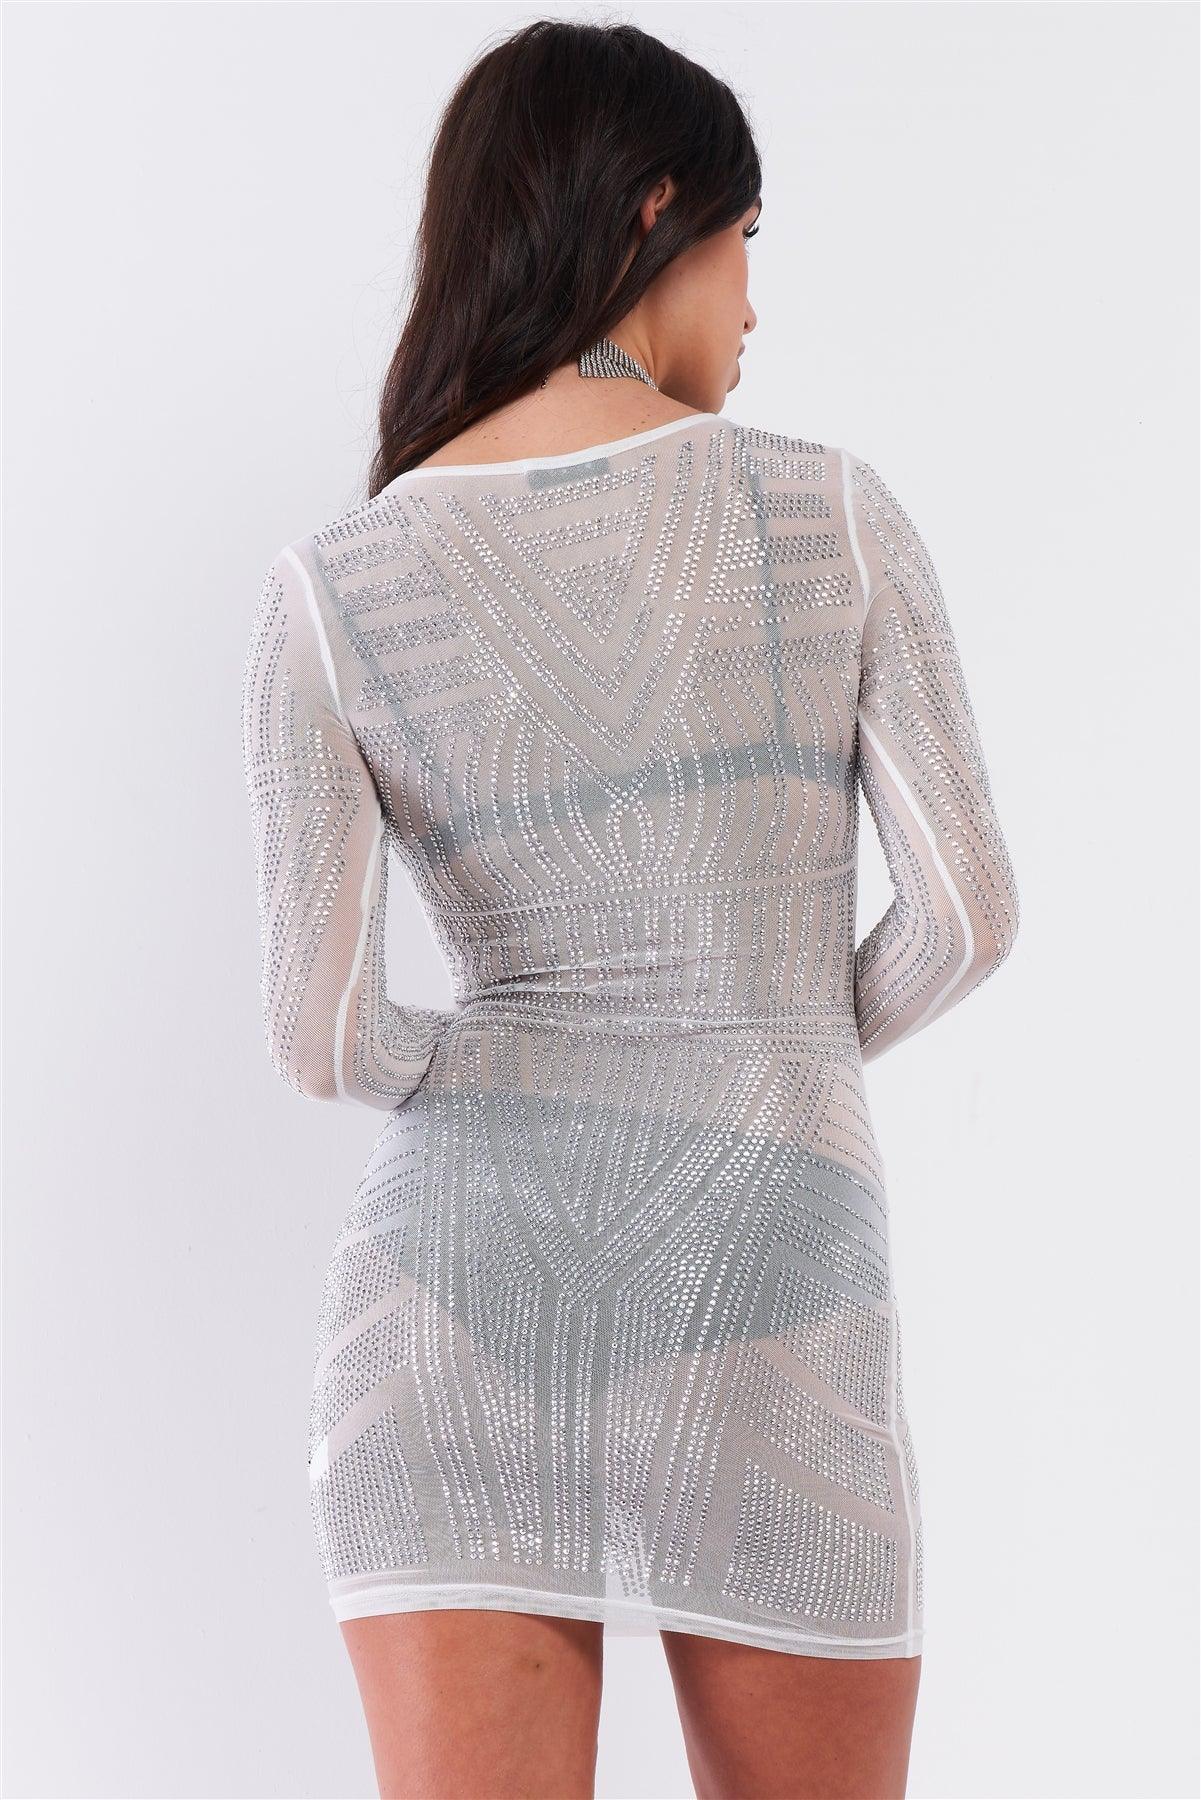 Silver Rhinestone Studded Sheer Mesh Long Sleeve Bodycon Dress /1-2-2-2